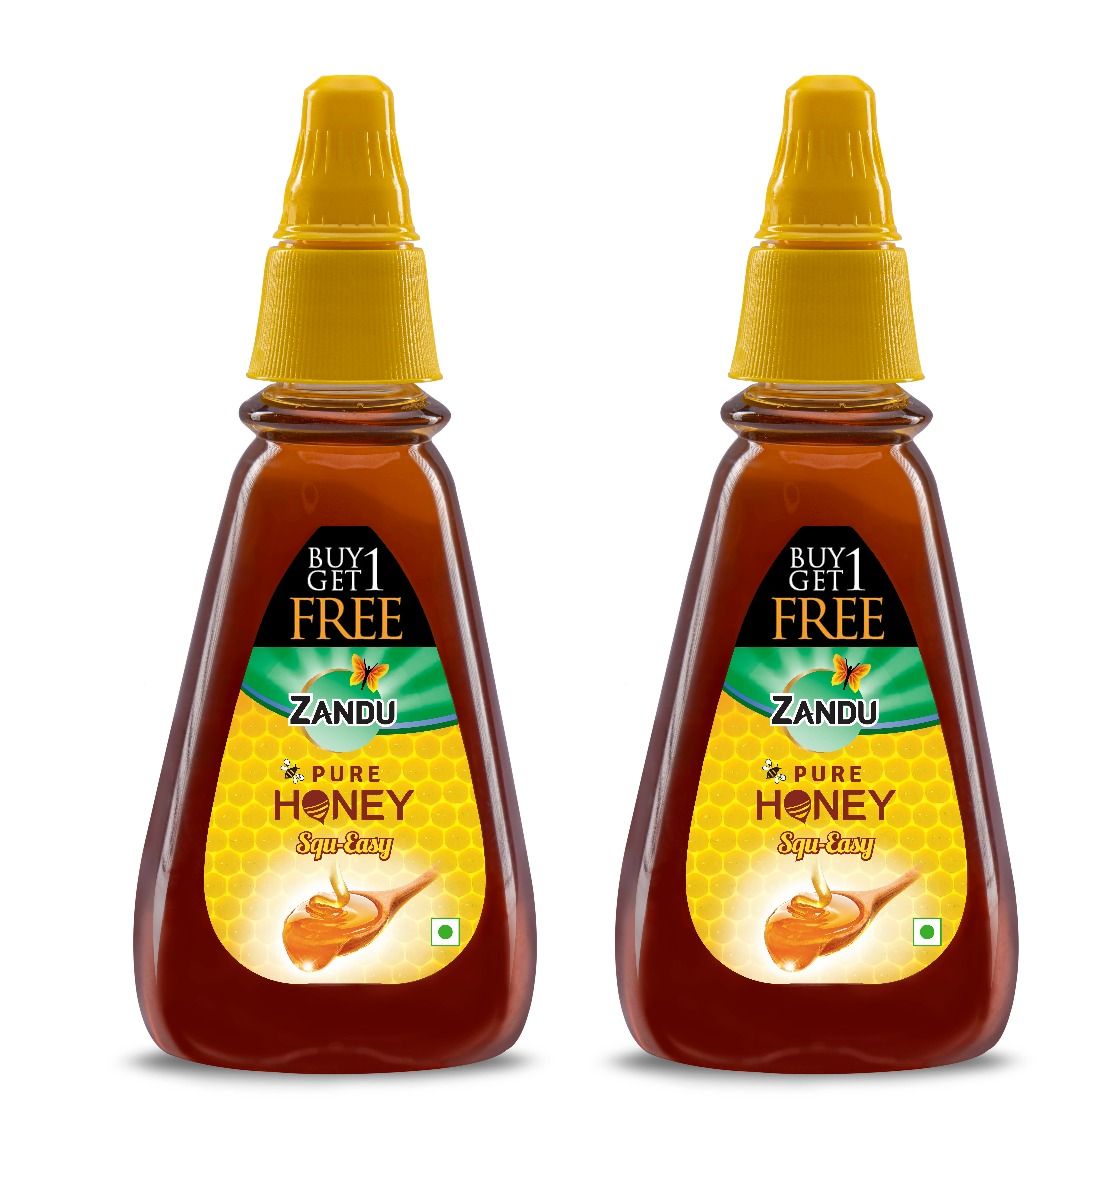 Zandu Pure Honey 100% guaranteed purity Squ-Easy pack , Buy 1 Get 1 Free, 400 gm each, Pack of 1 